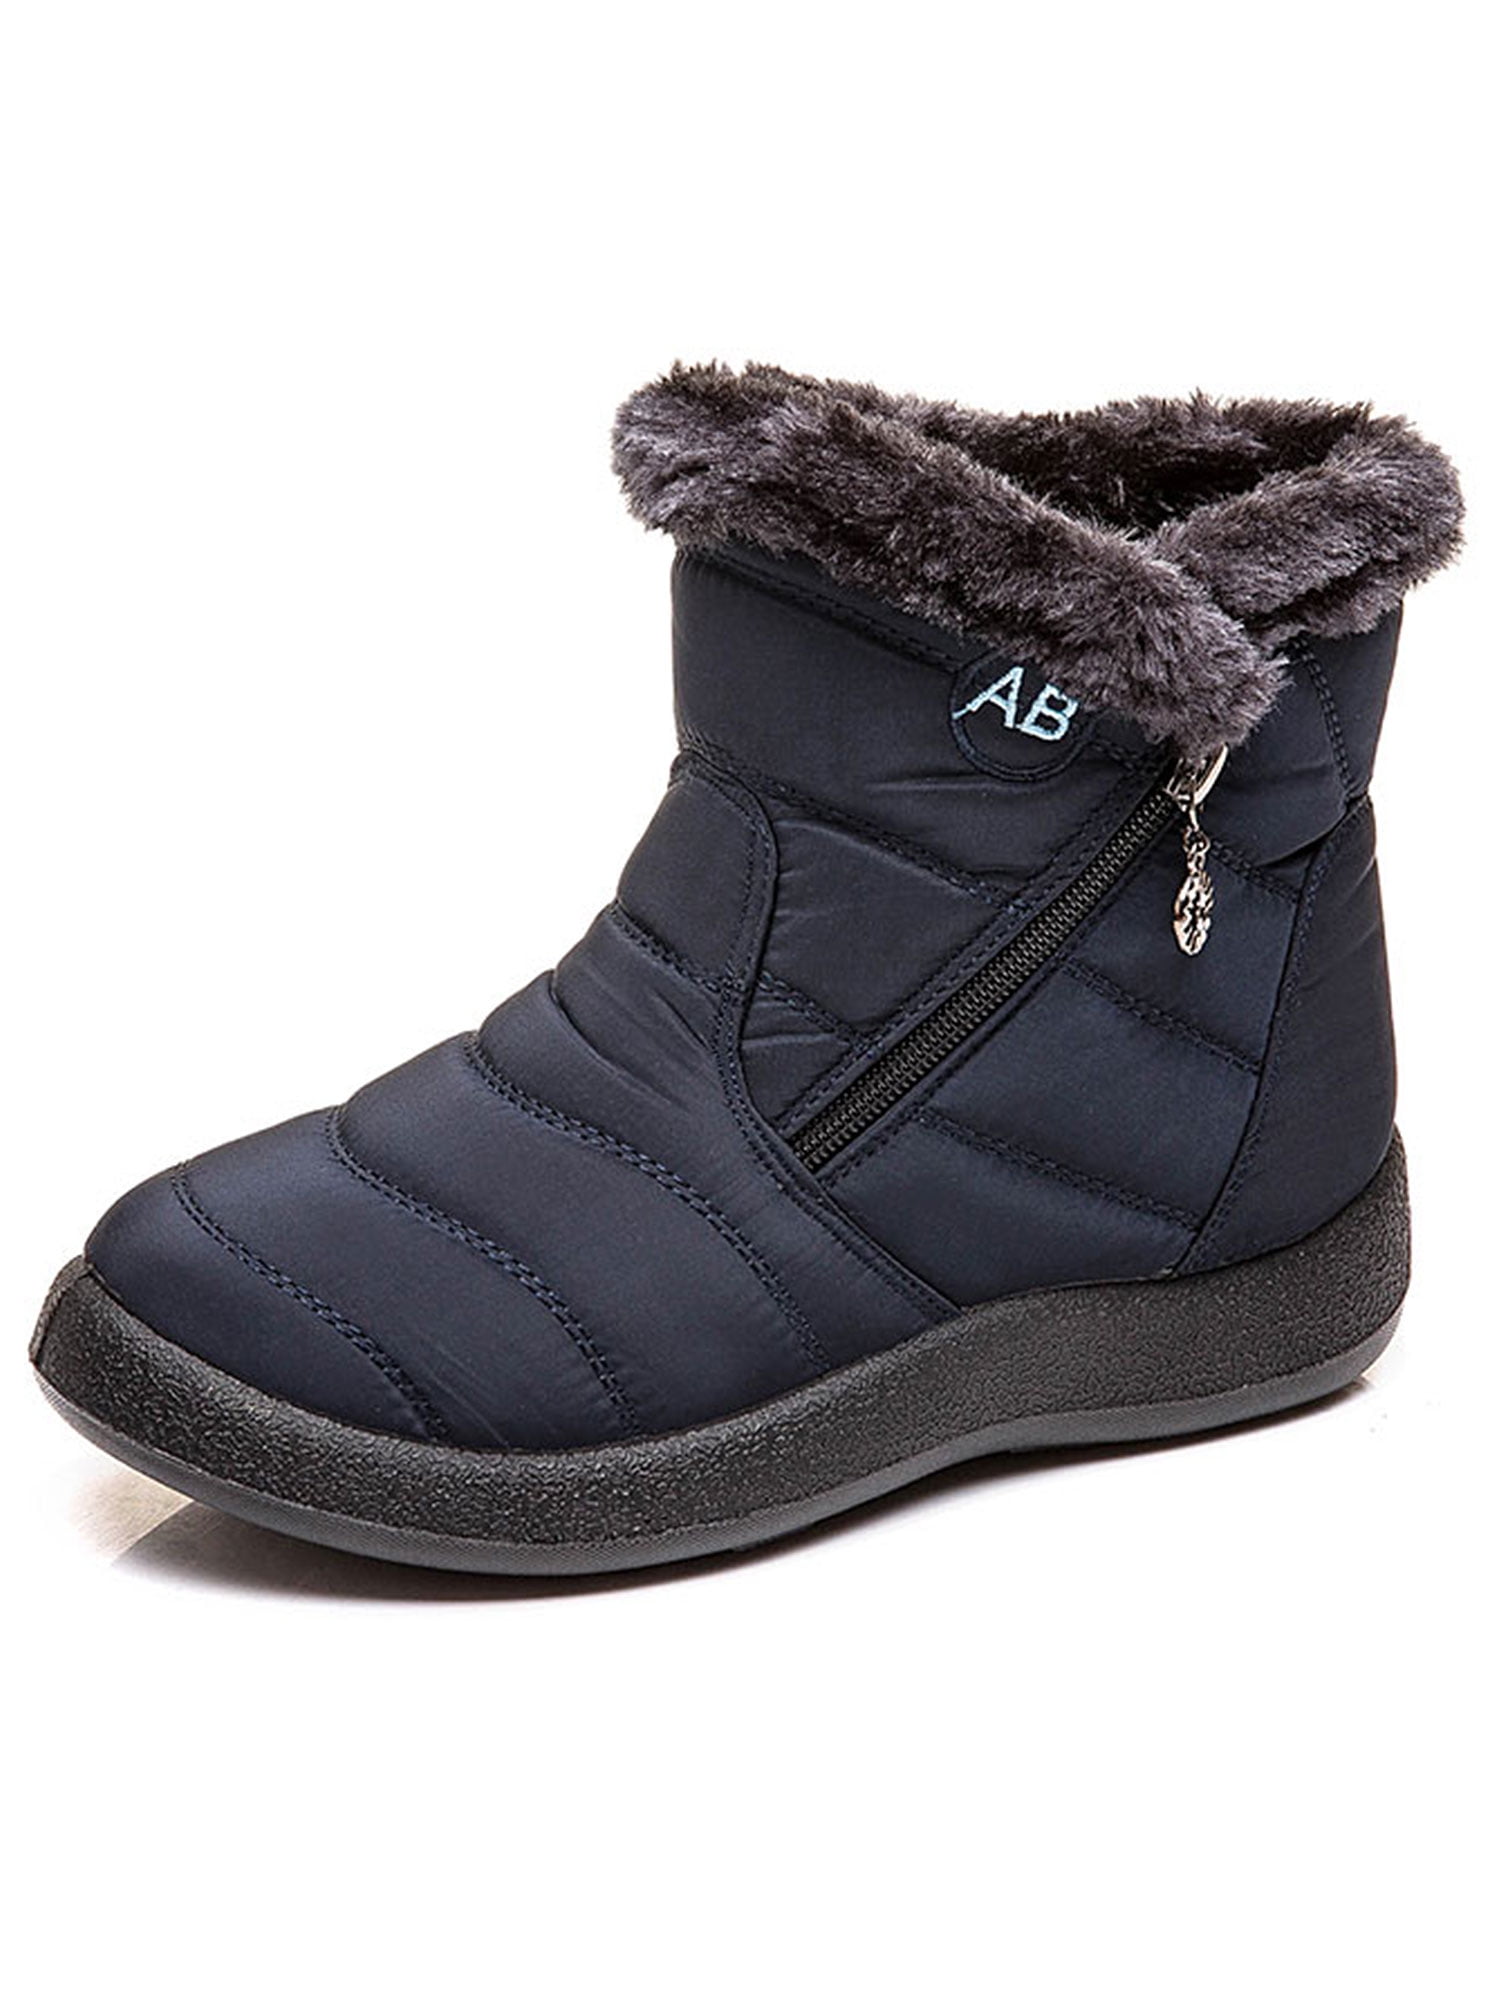 Ymiytan Womens Snow Boots Side Zippers Waterproof Winter Boots Comfort ...